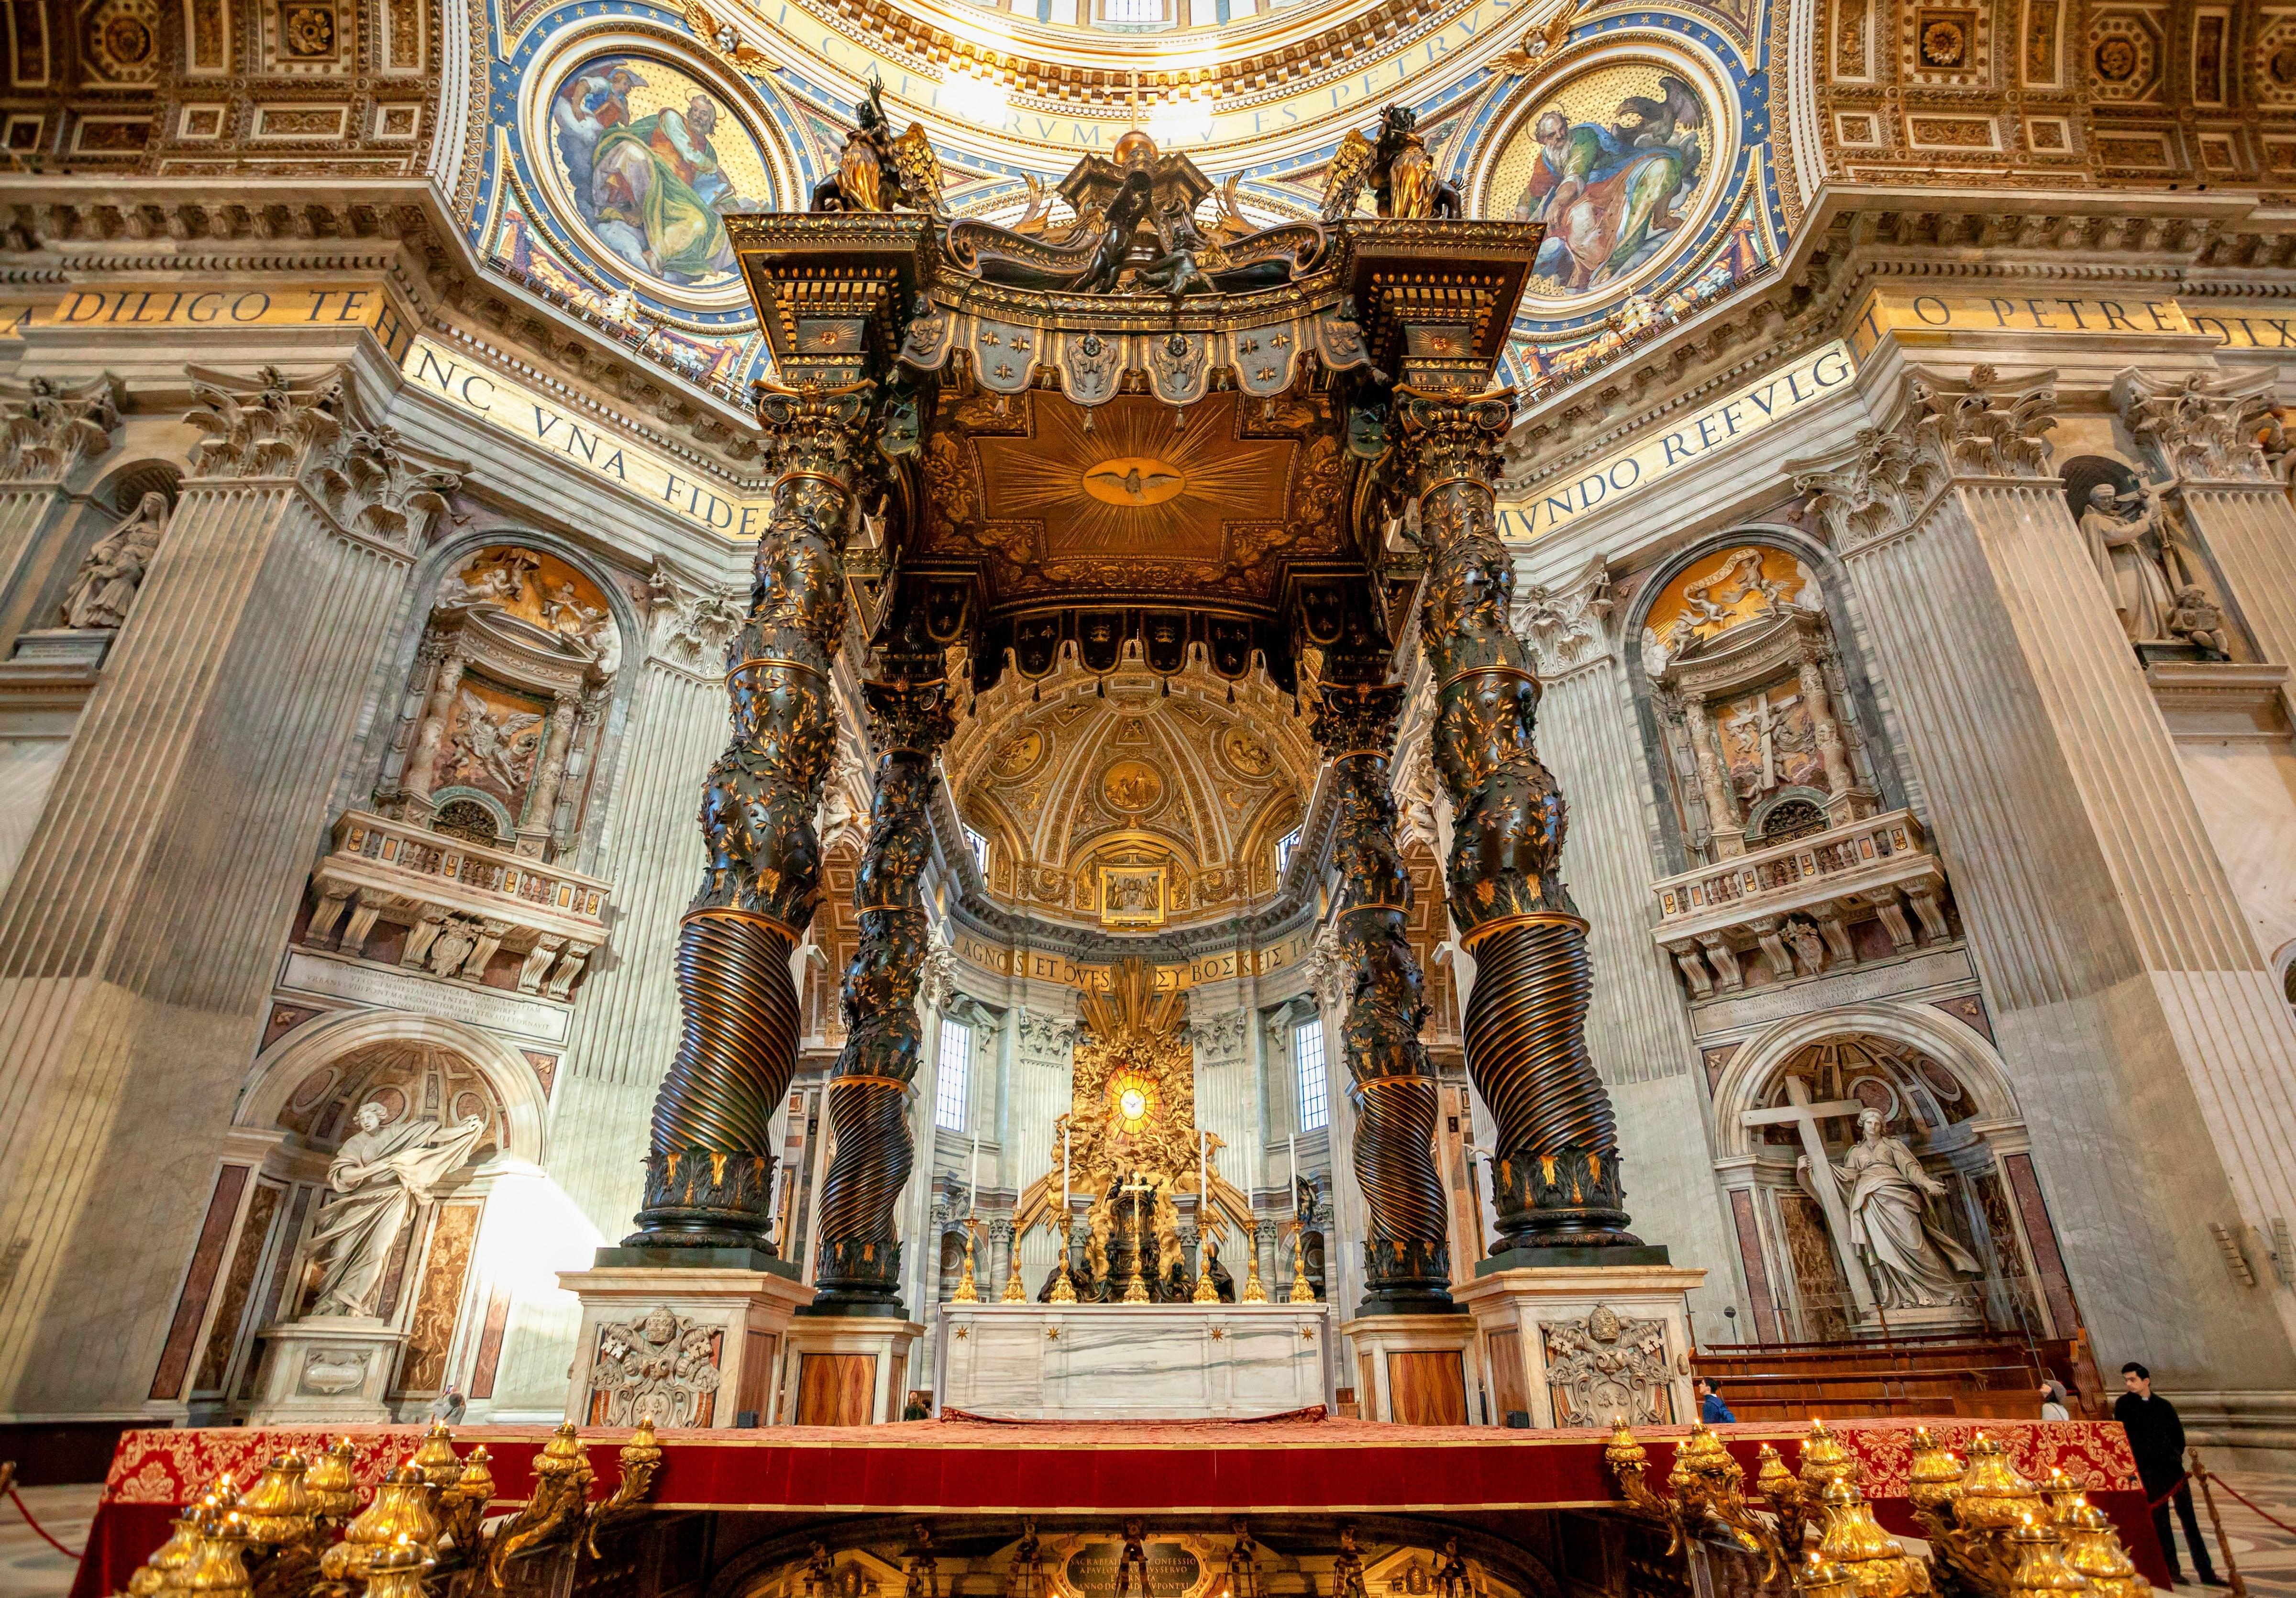 St. Peter's Basilica throne